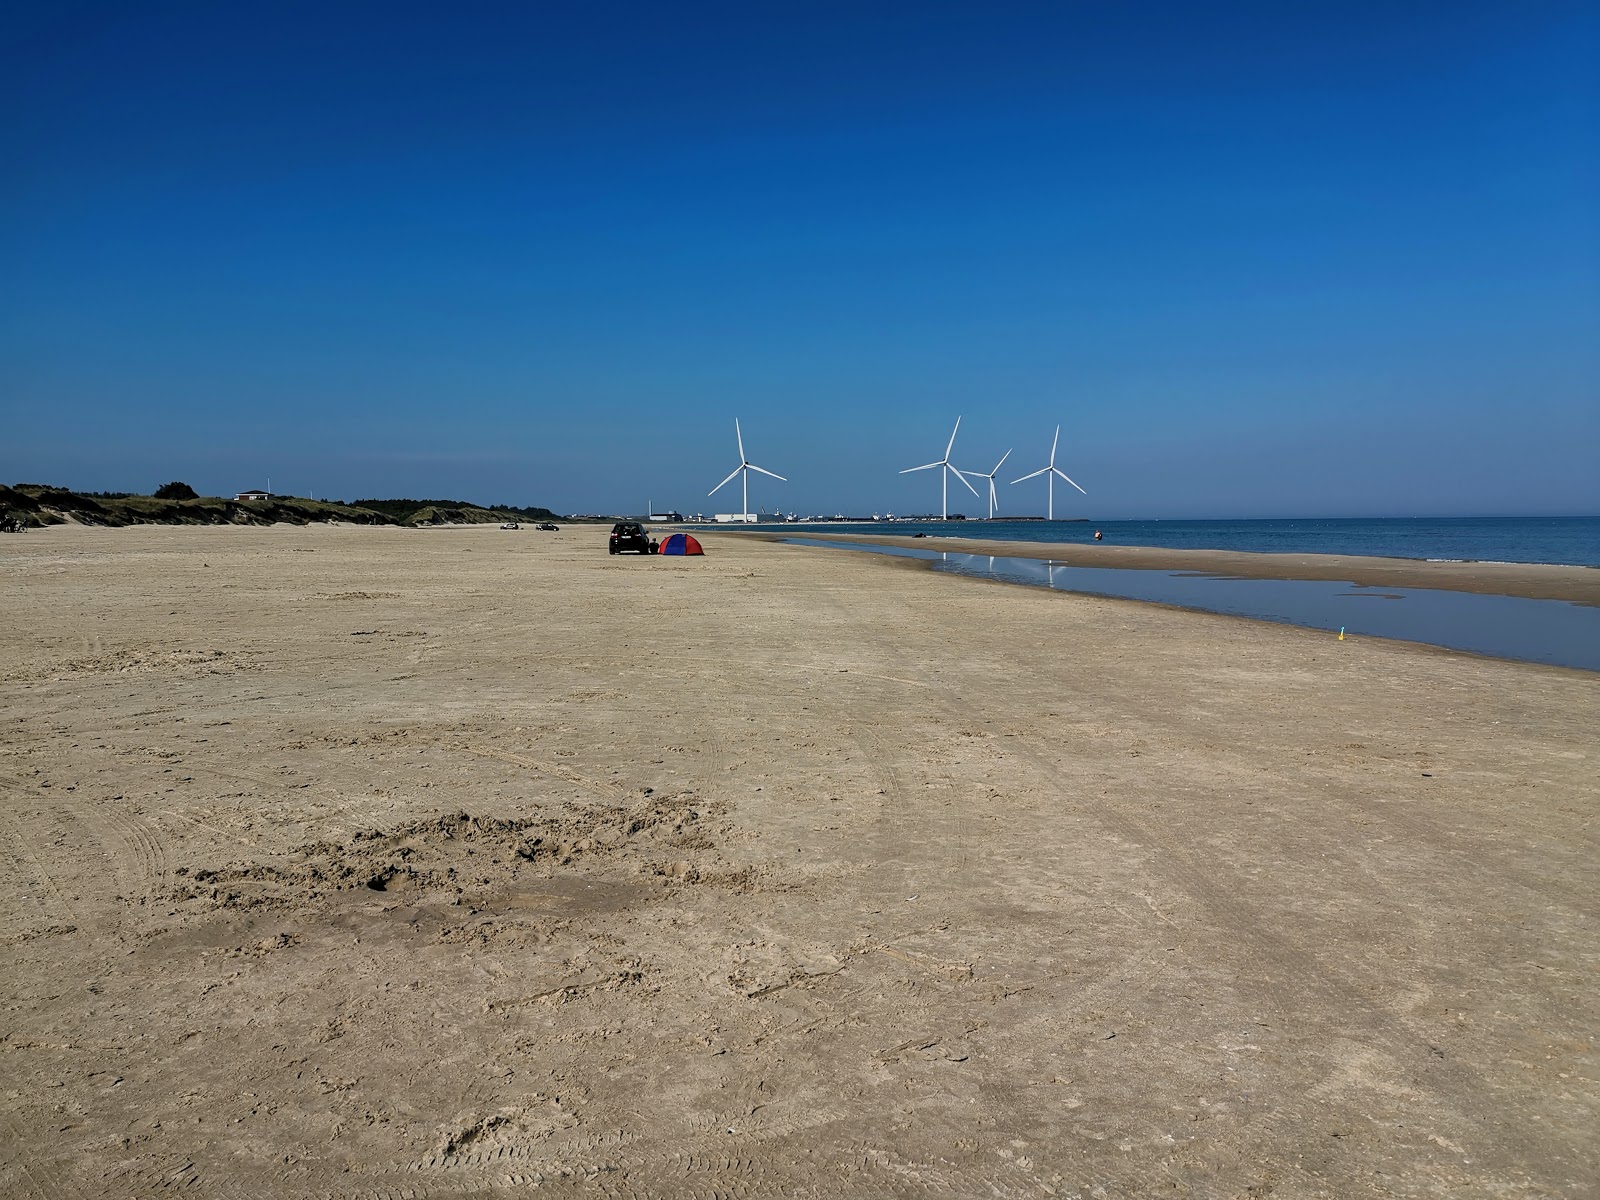 Foto av Kjul Beach med hög nivå av renlighet